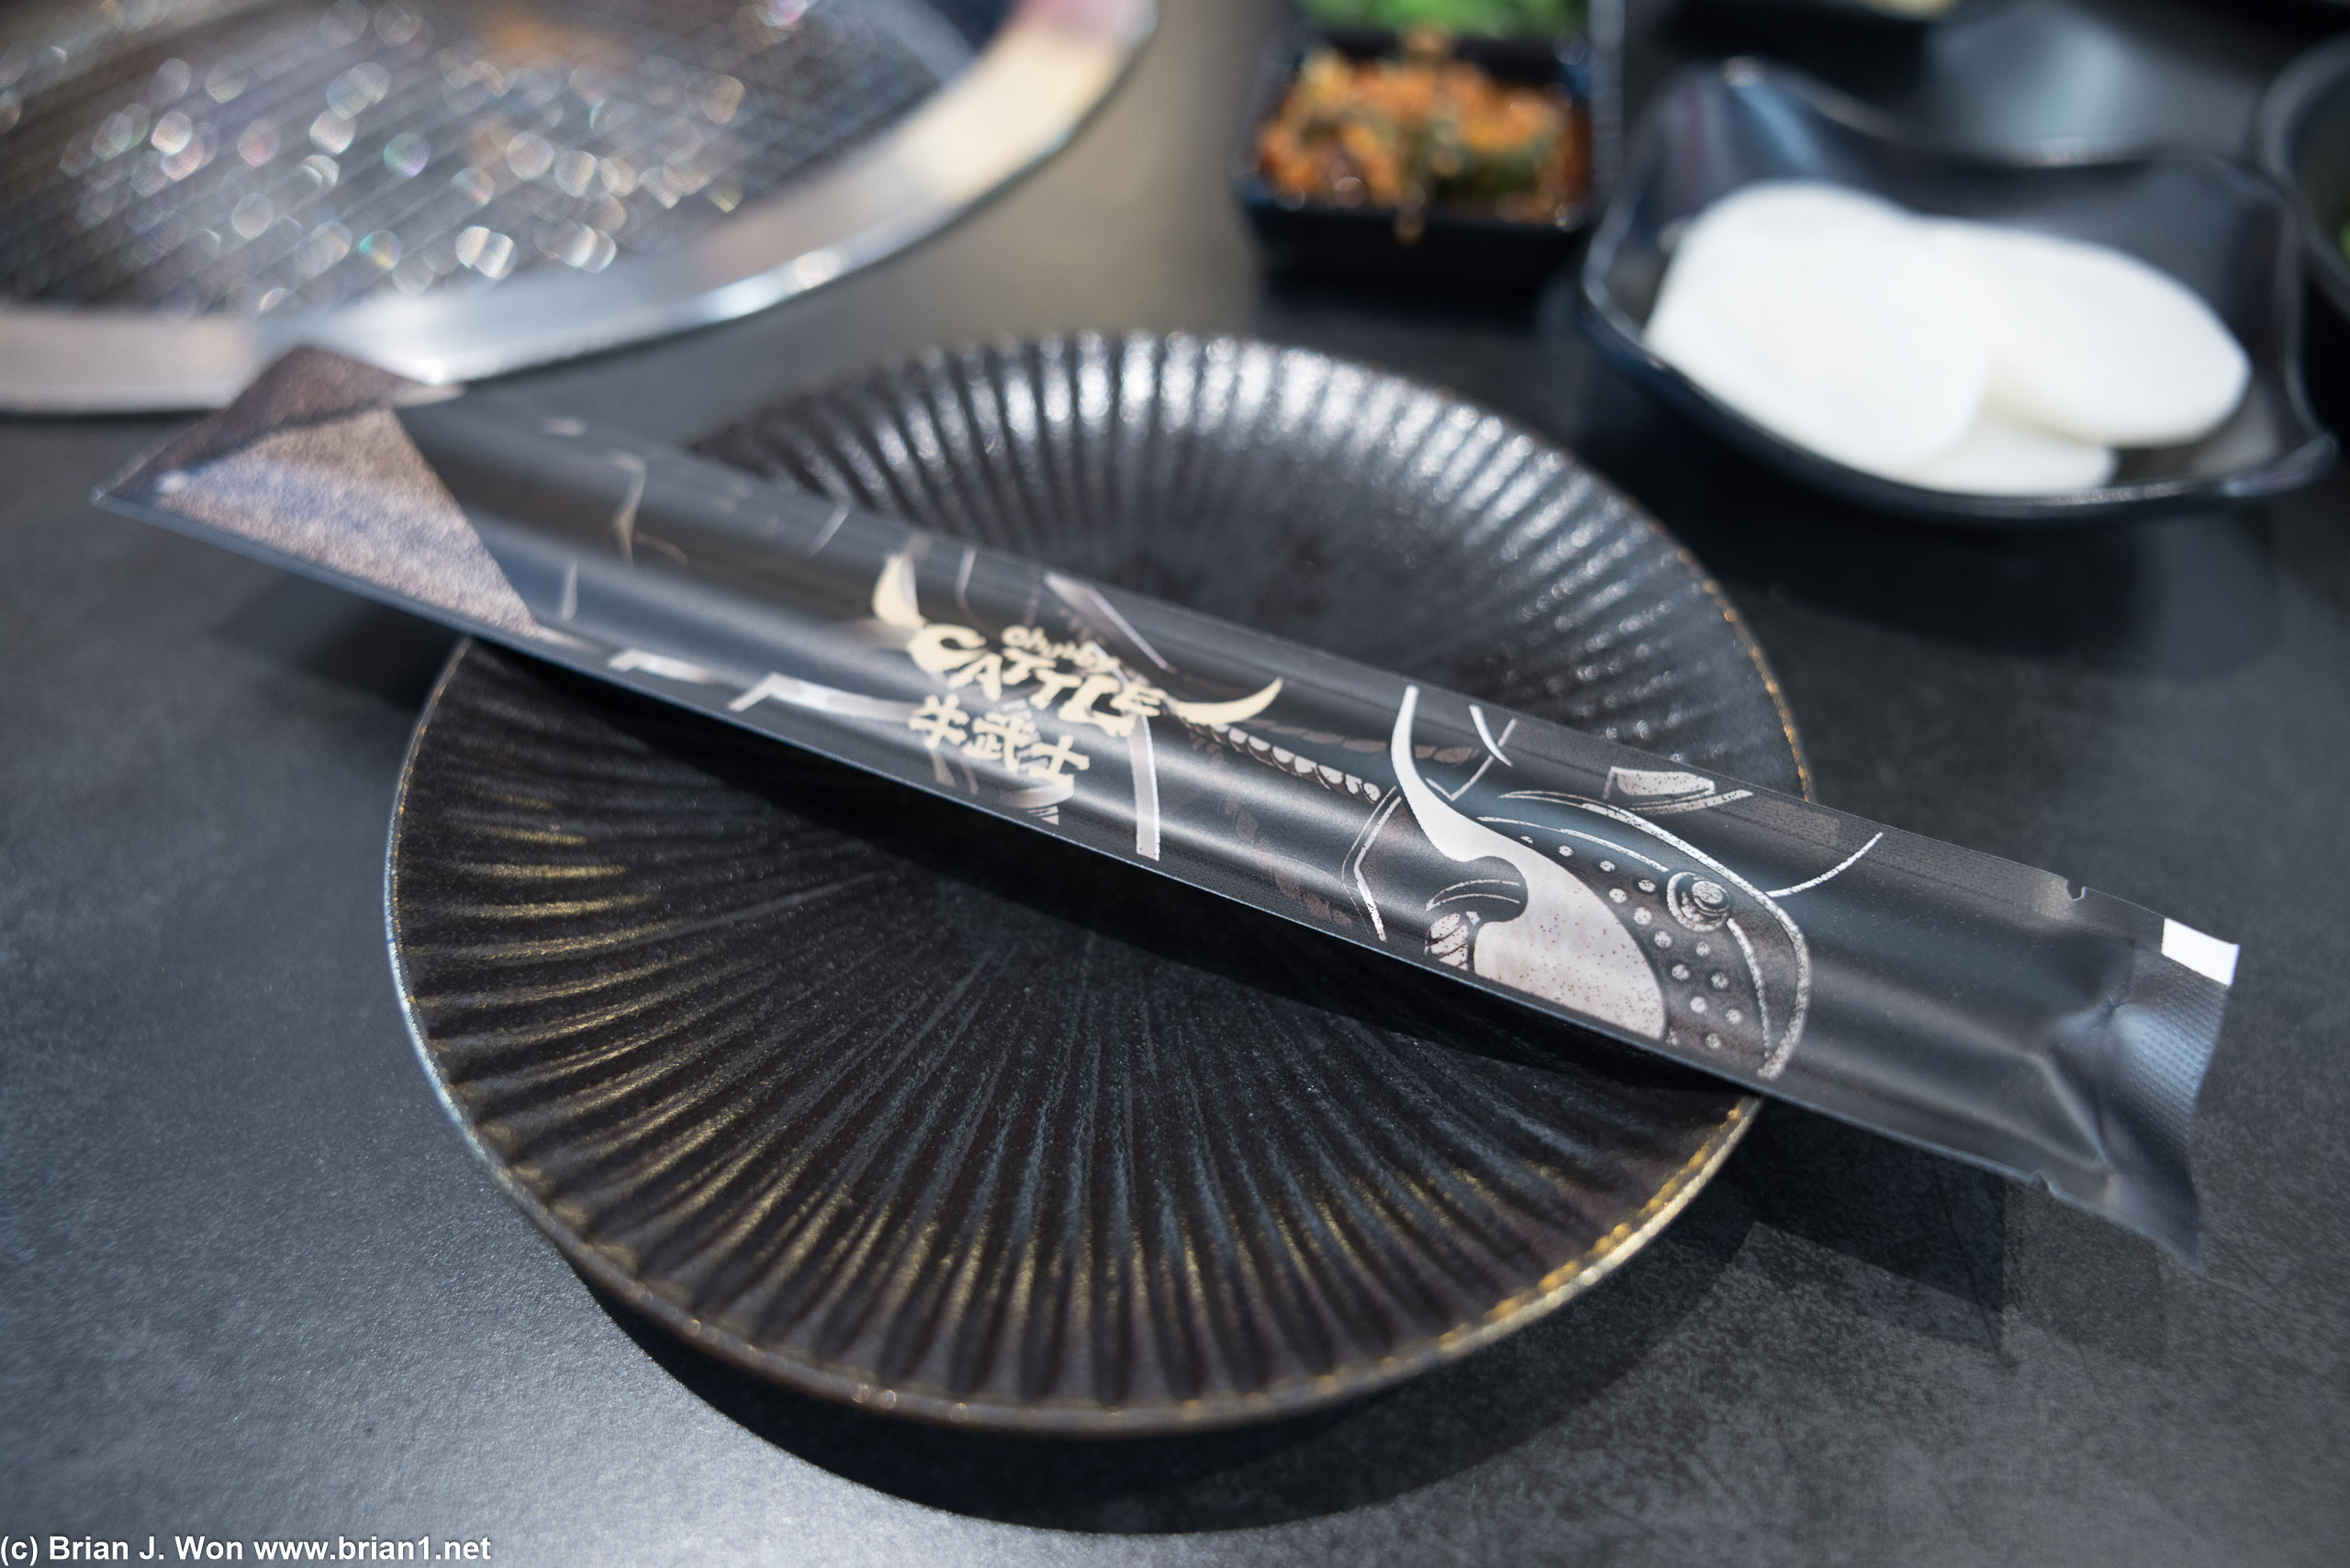 Some expensive disposasble chopsticks.